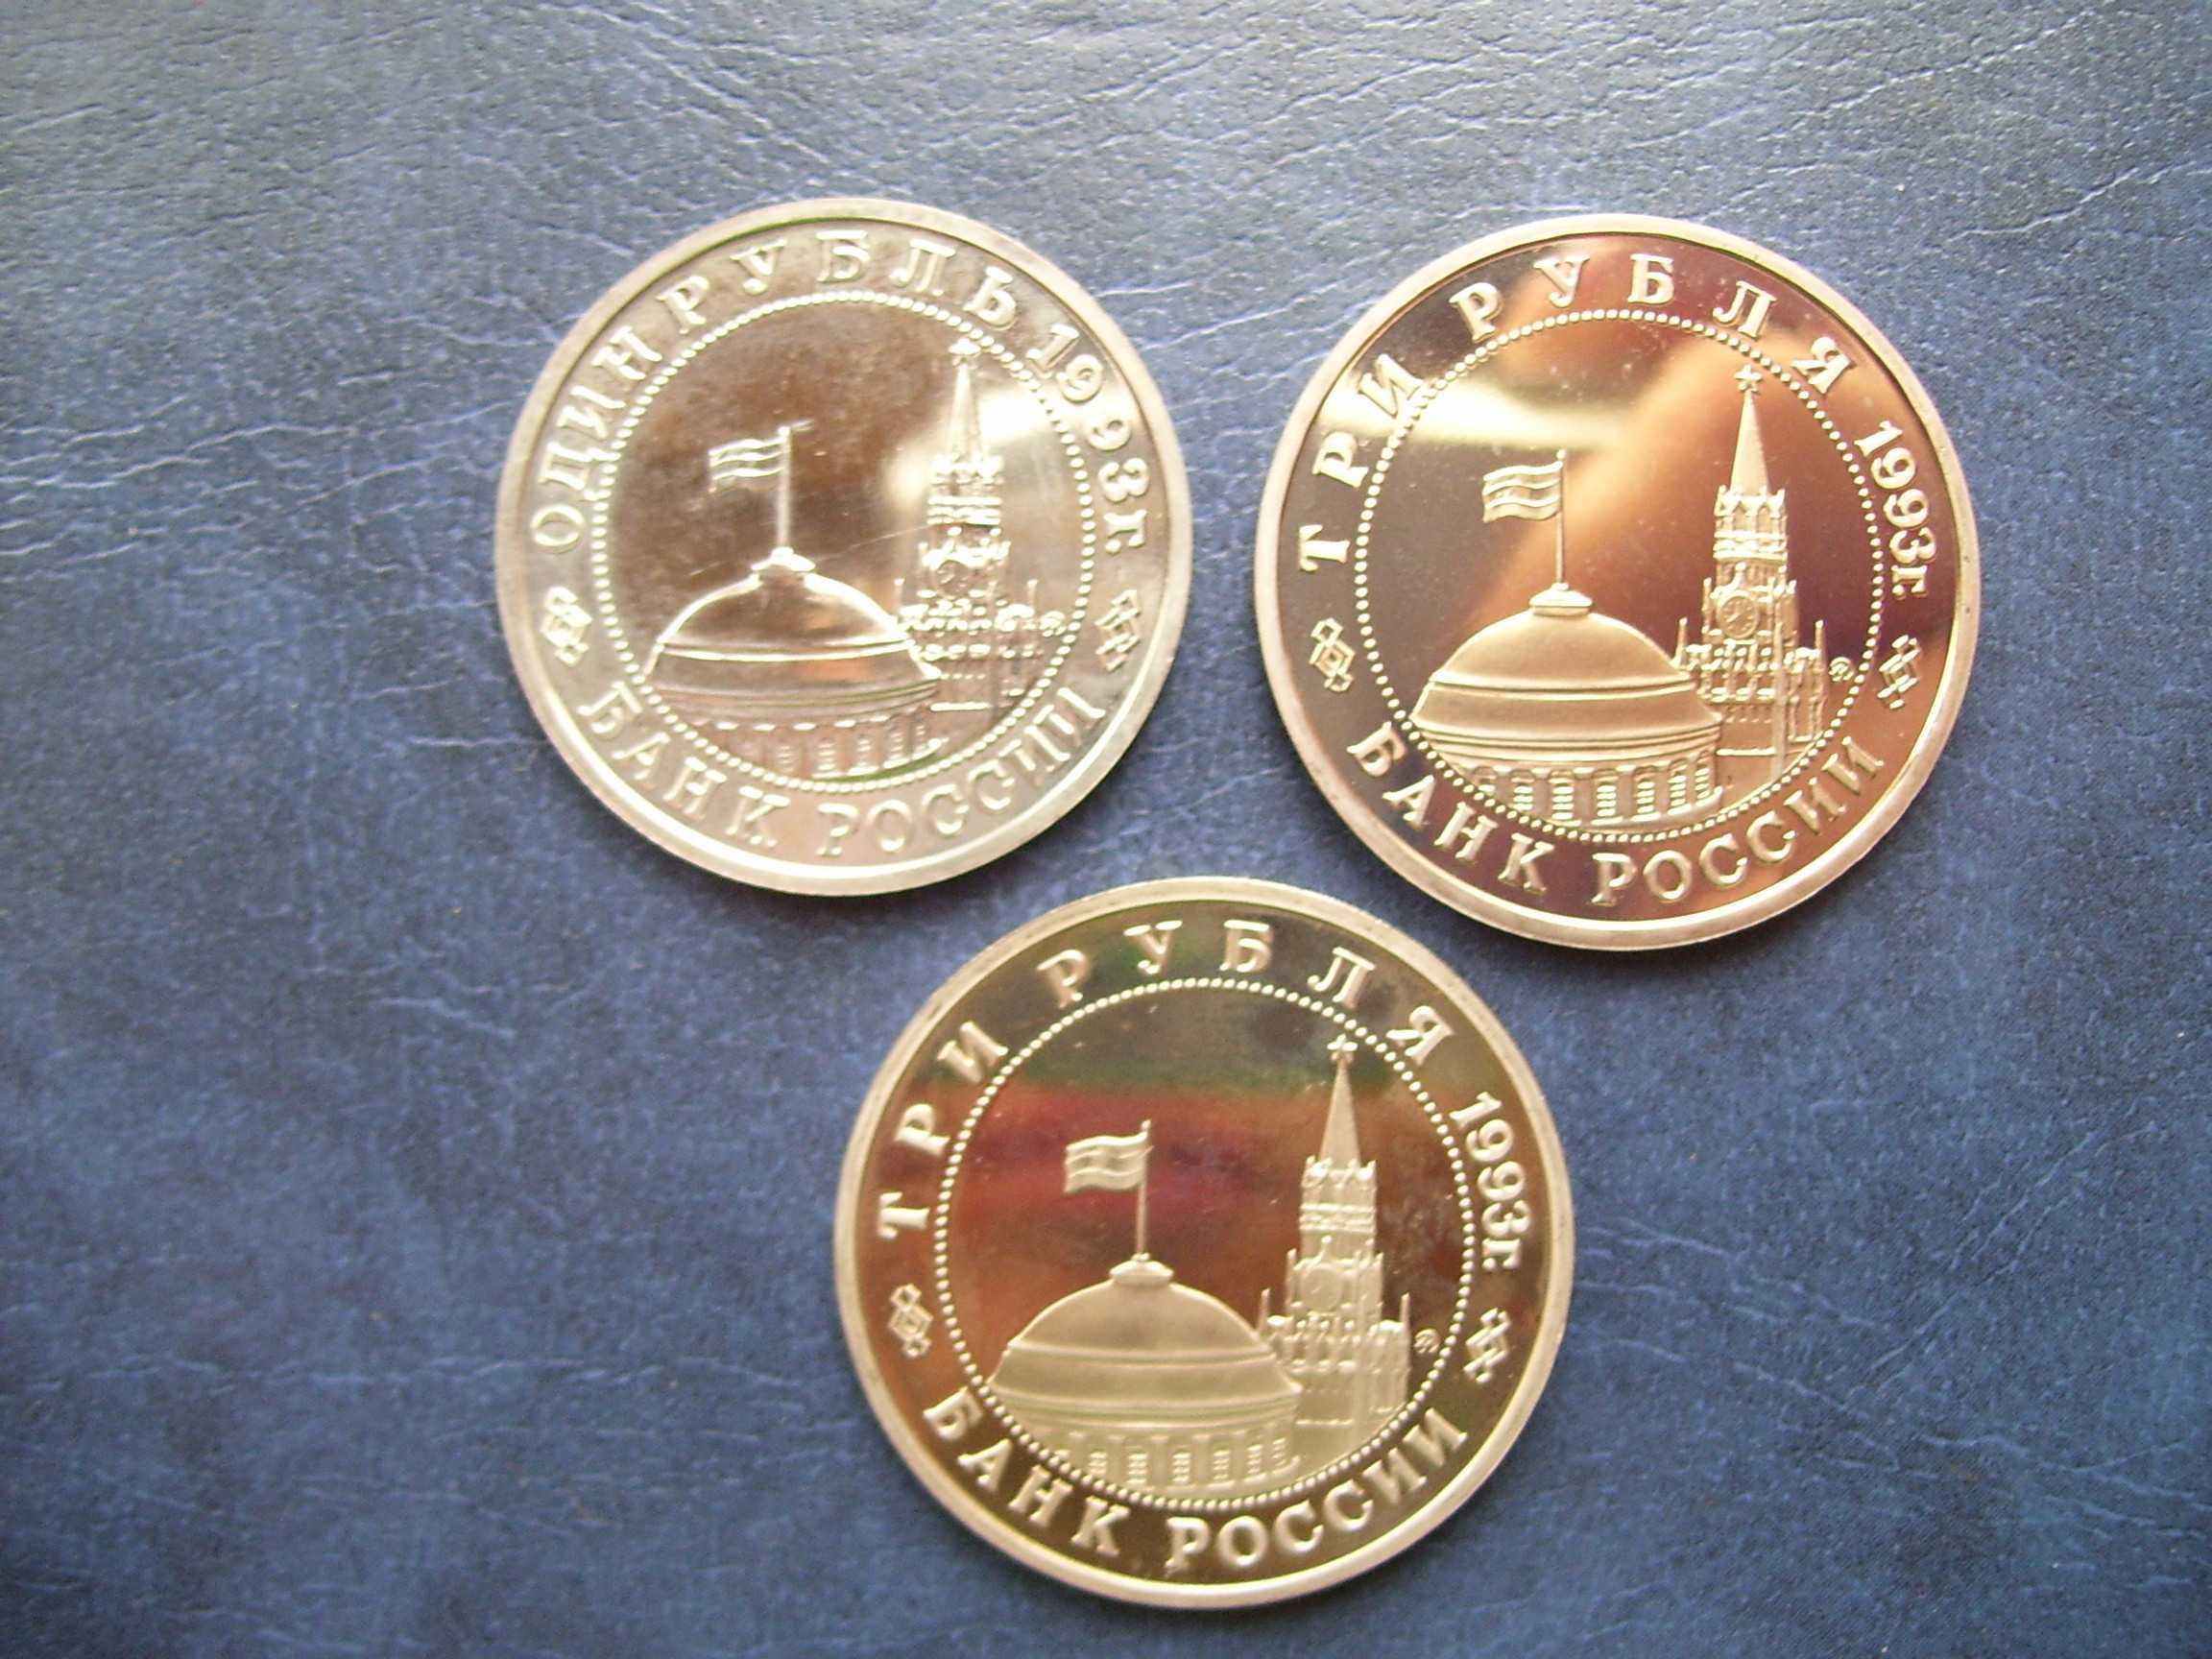 Stare monety 1 rubel i 3 ruble 3 monety 1993 Rosja piękne